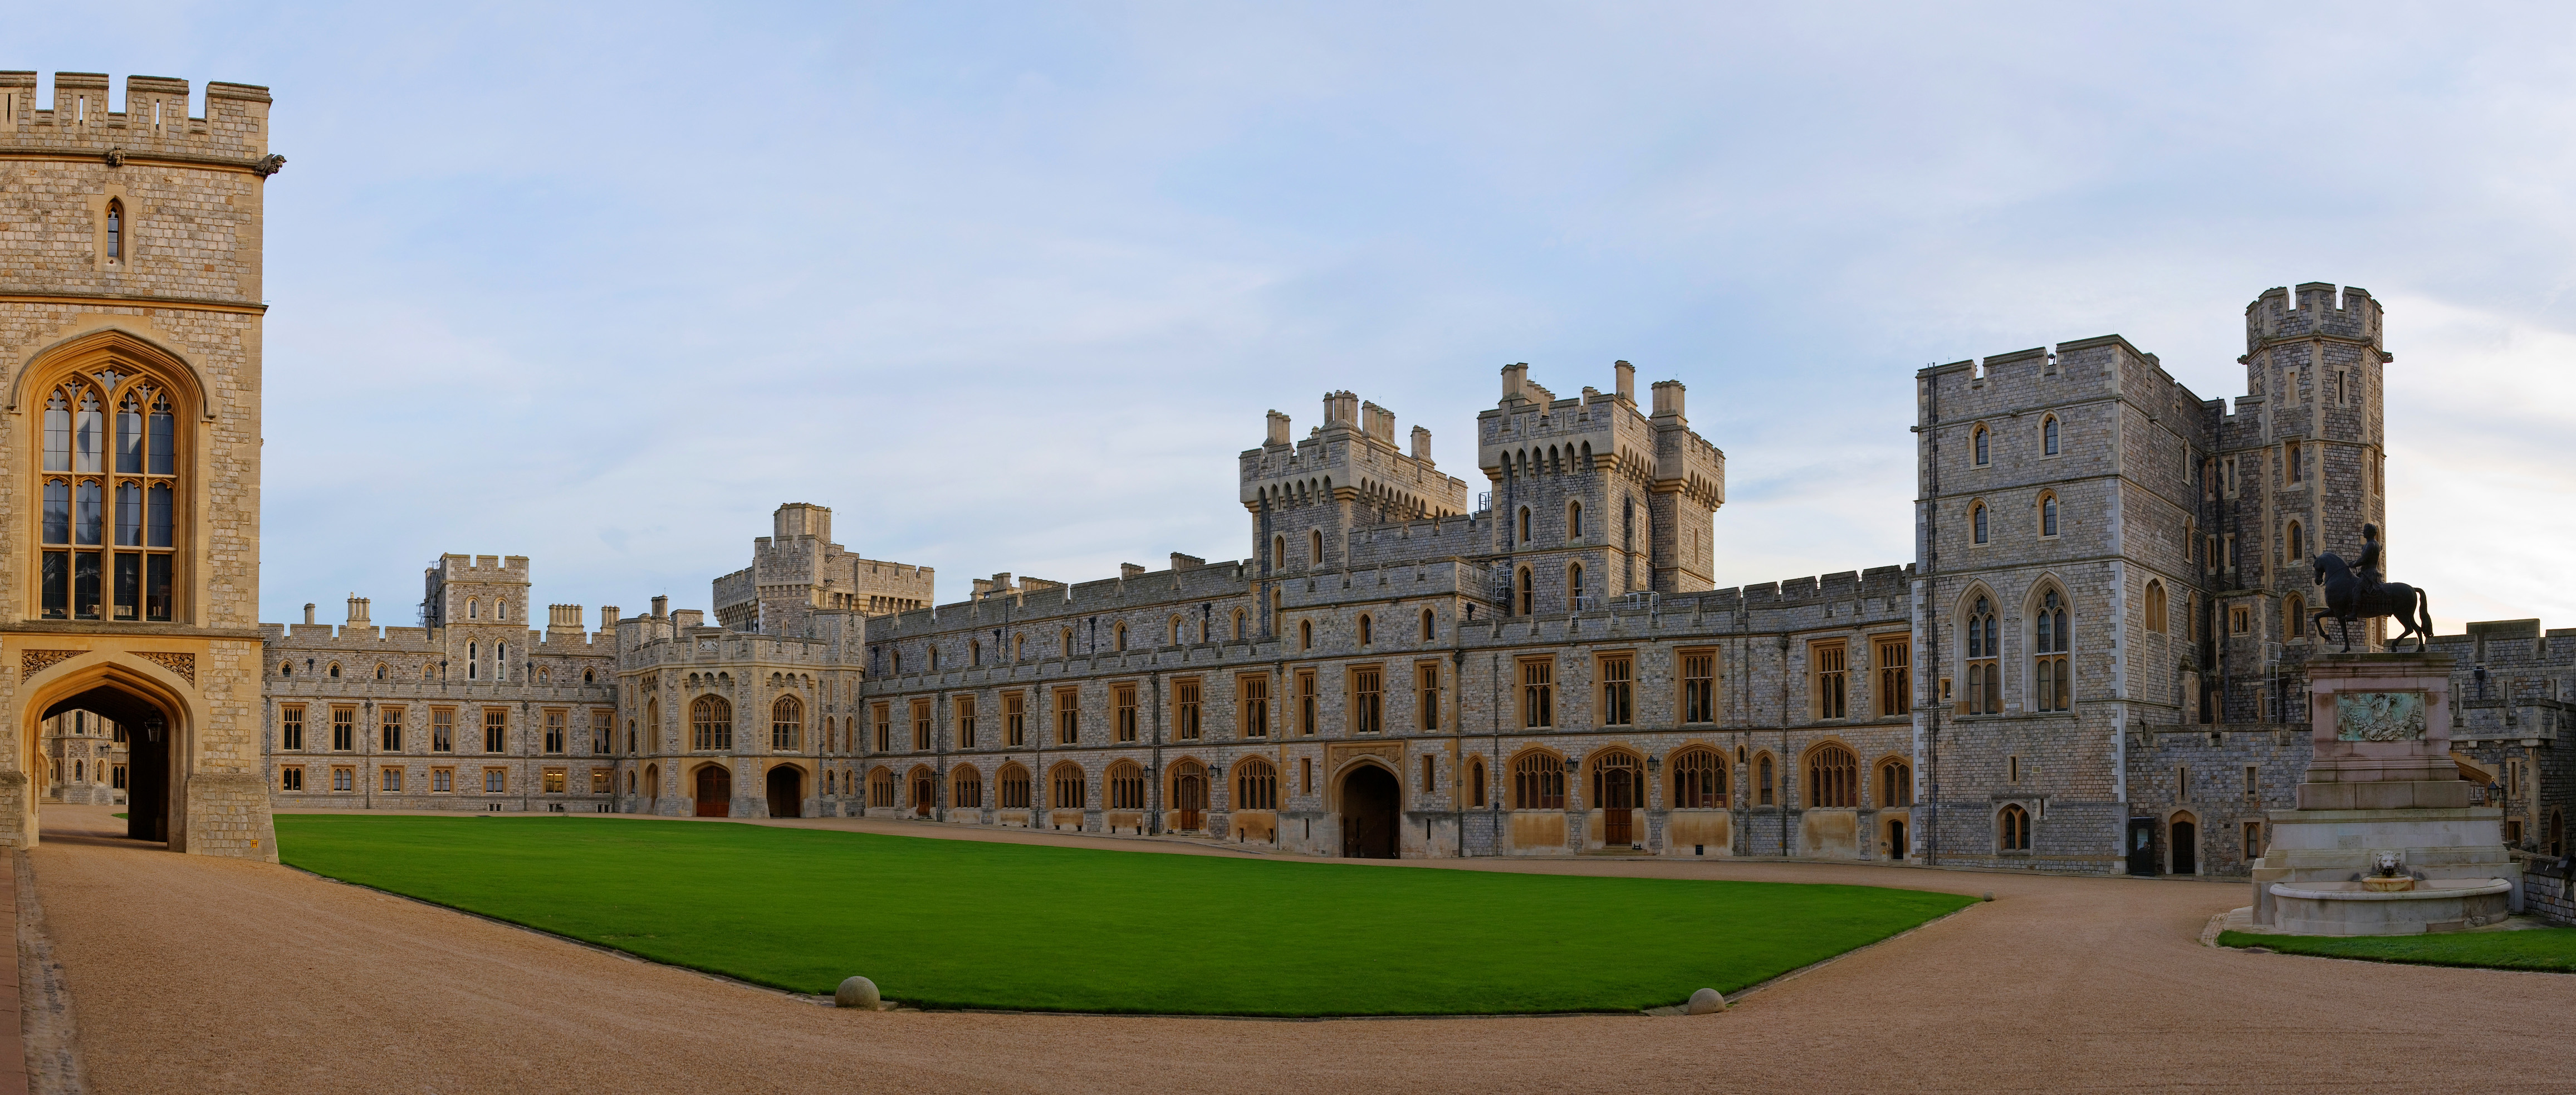 Windsor Castle #5